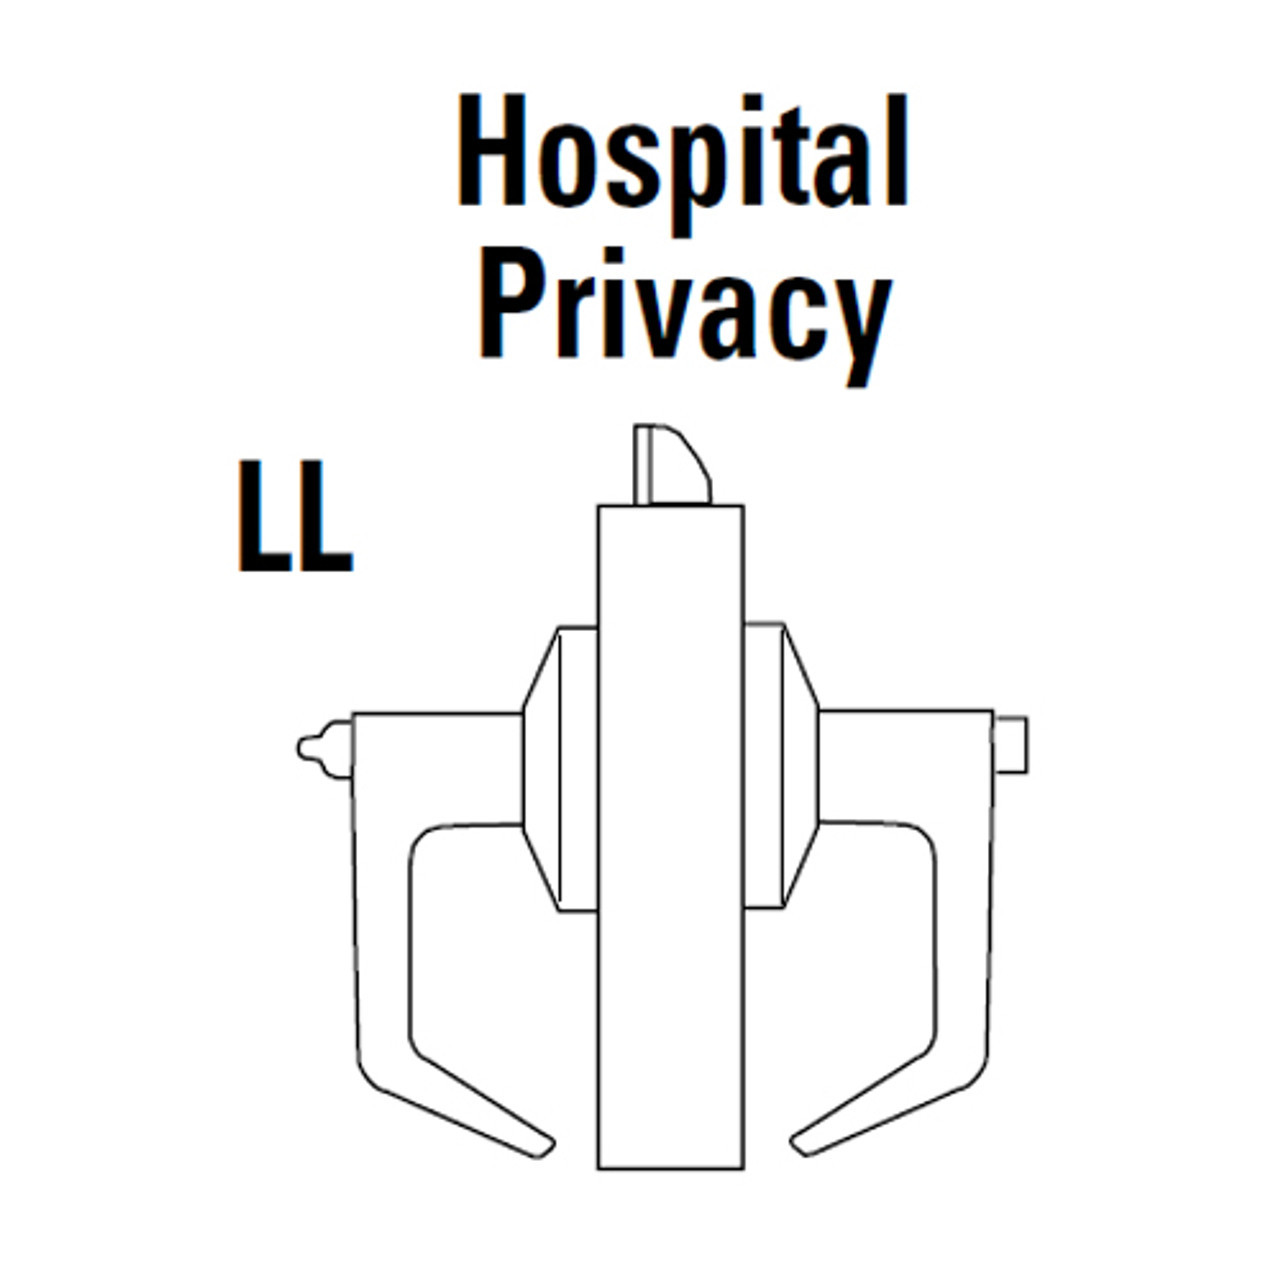 9K30LL14KSTK606LM Best 9K Series Hospital Privacy Heavy Duty Cylindrical Lever Locks in Satin Brass